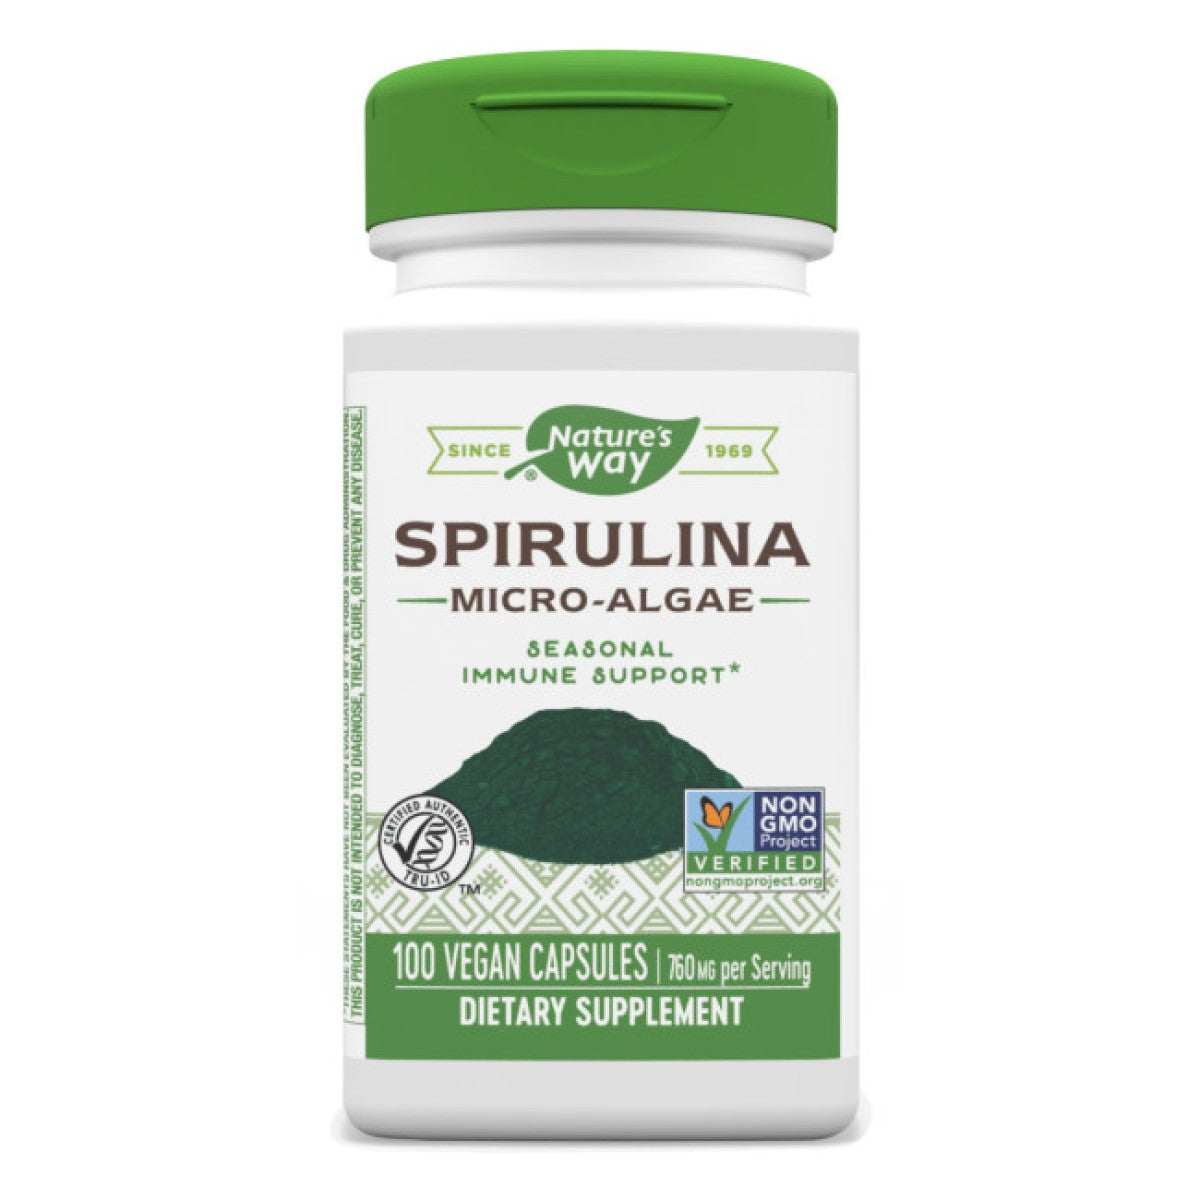 Primary image of Spirulina